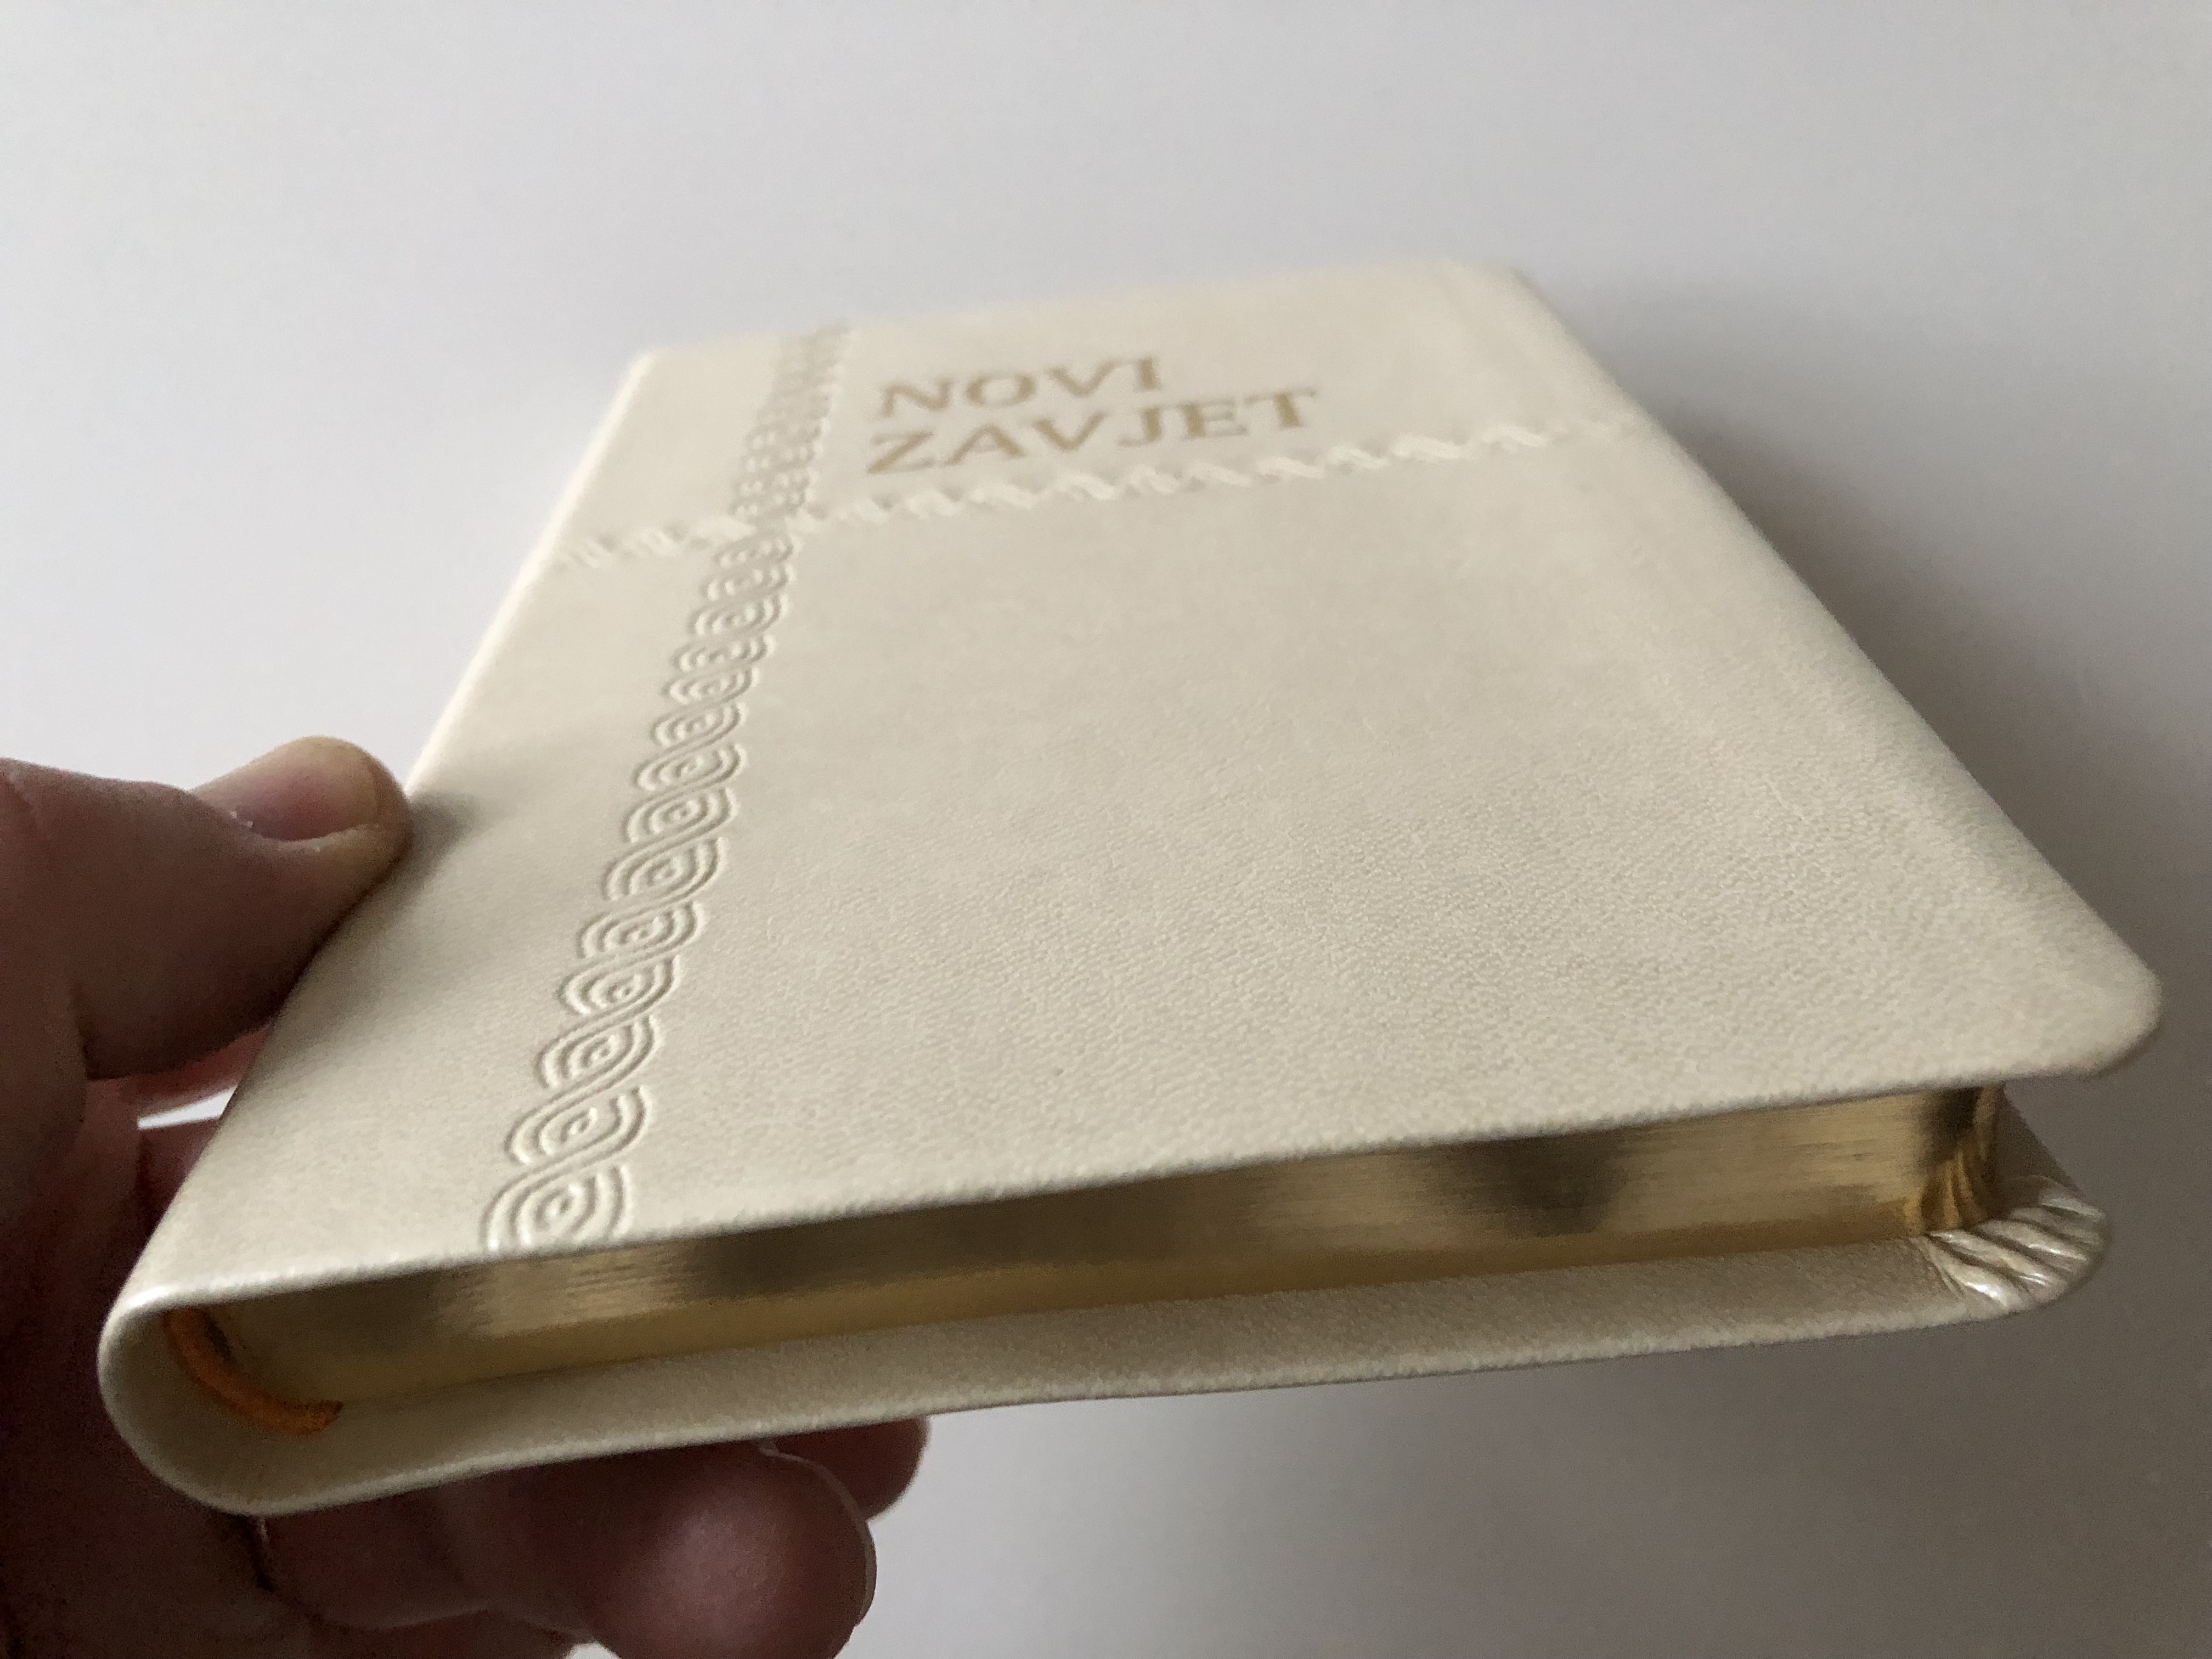 novi-zavjet-new-testament-in-croatian-language-white-leather-bound-golden-edges-2-.jpg